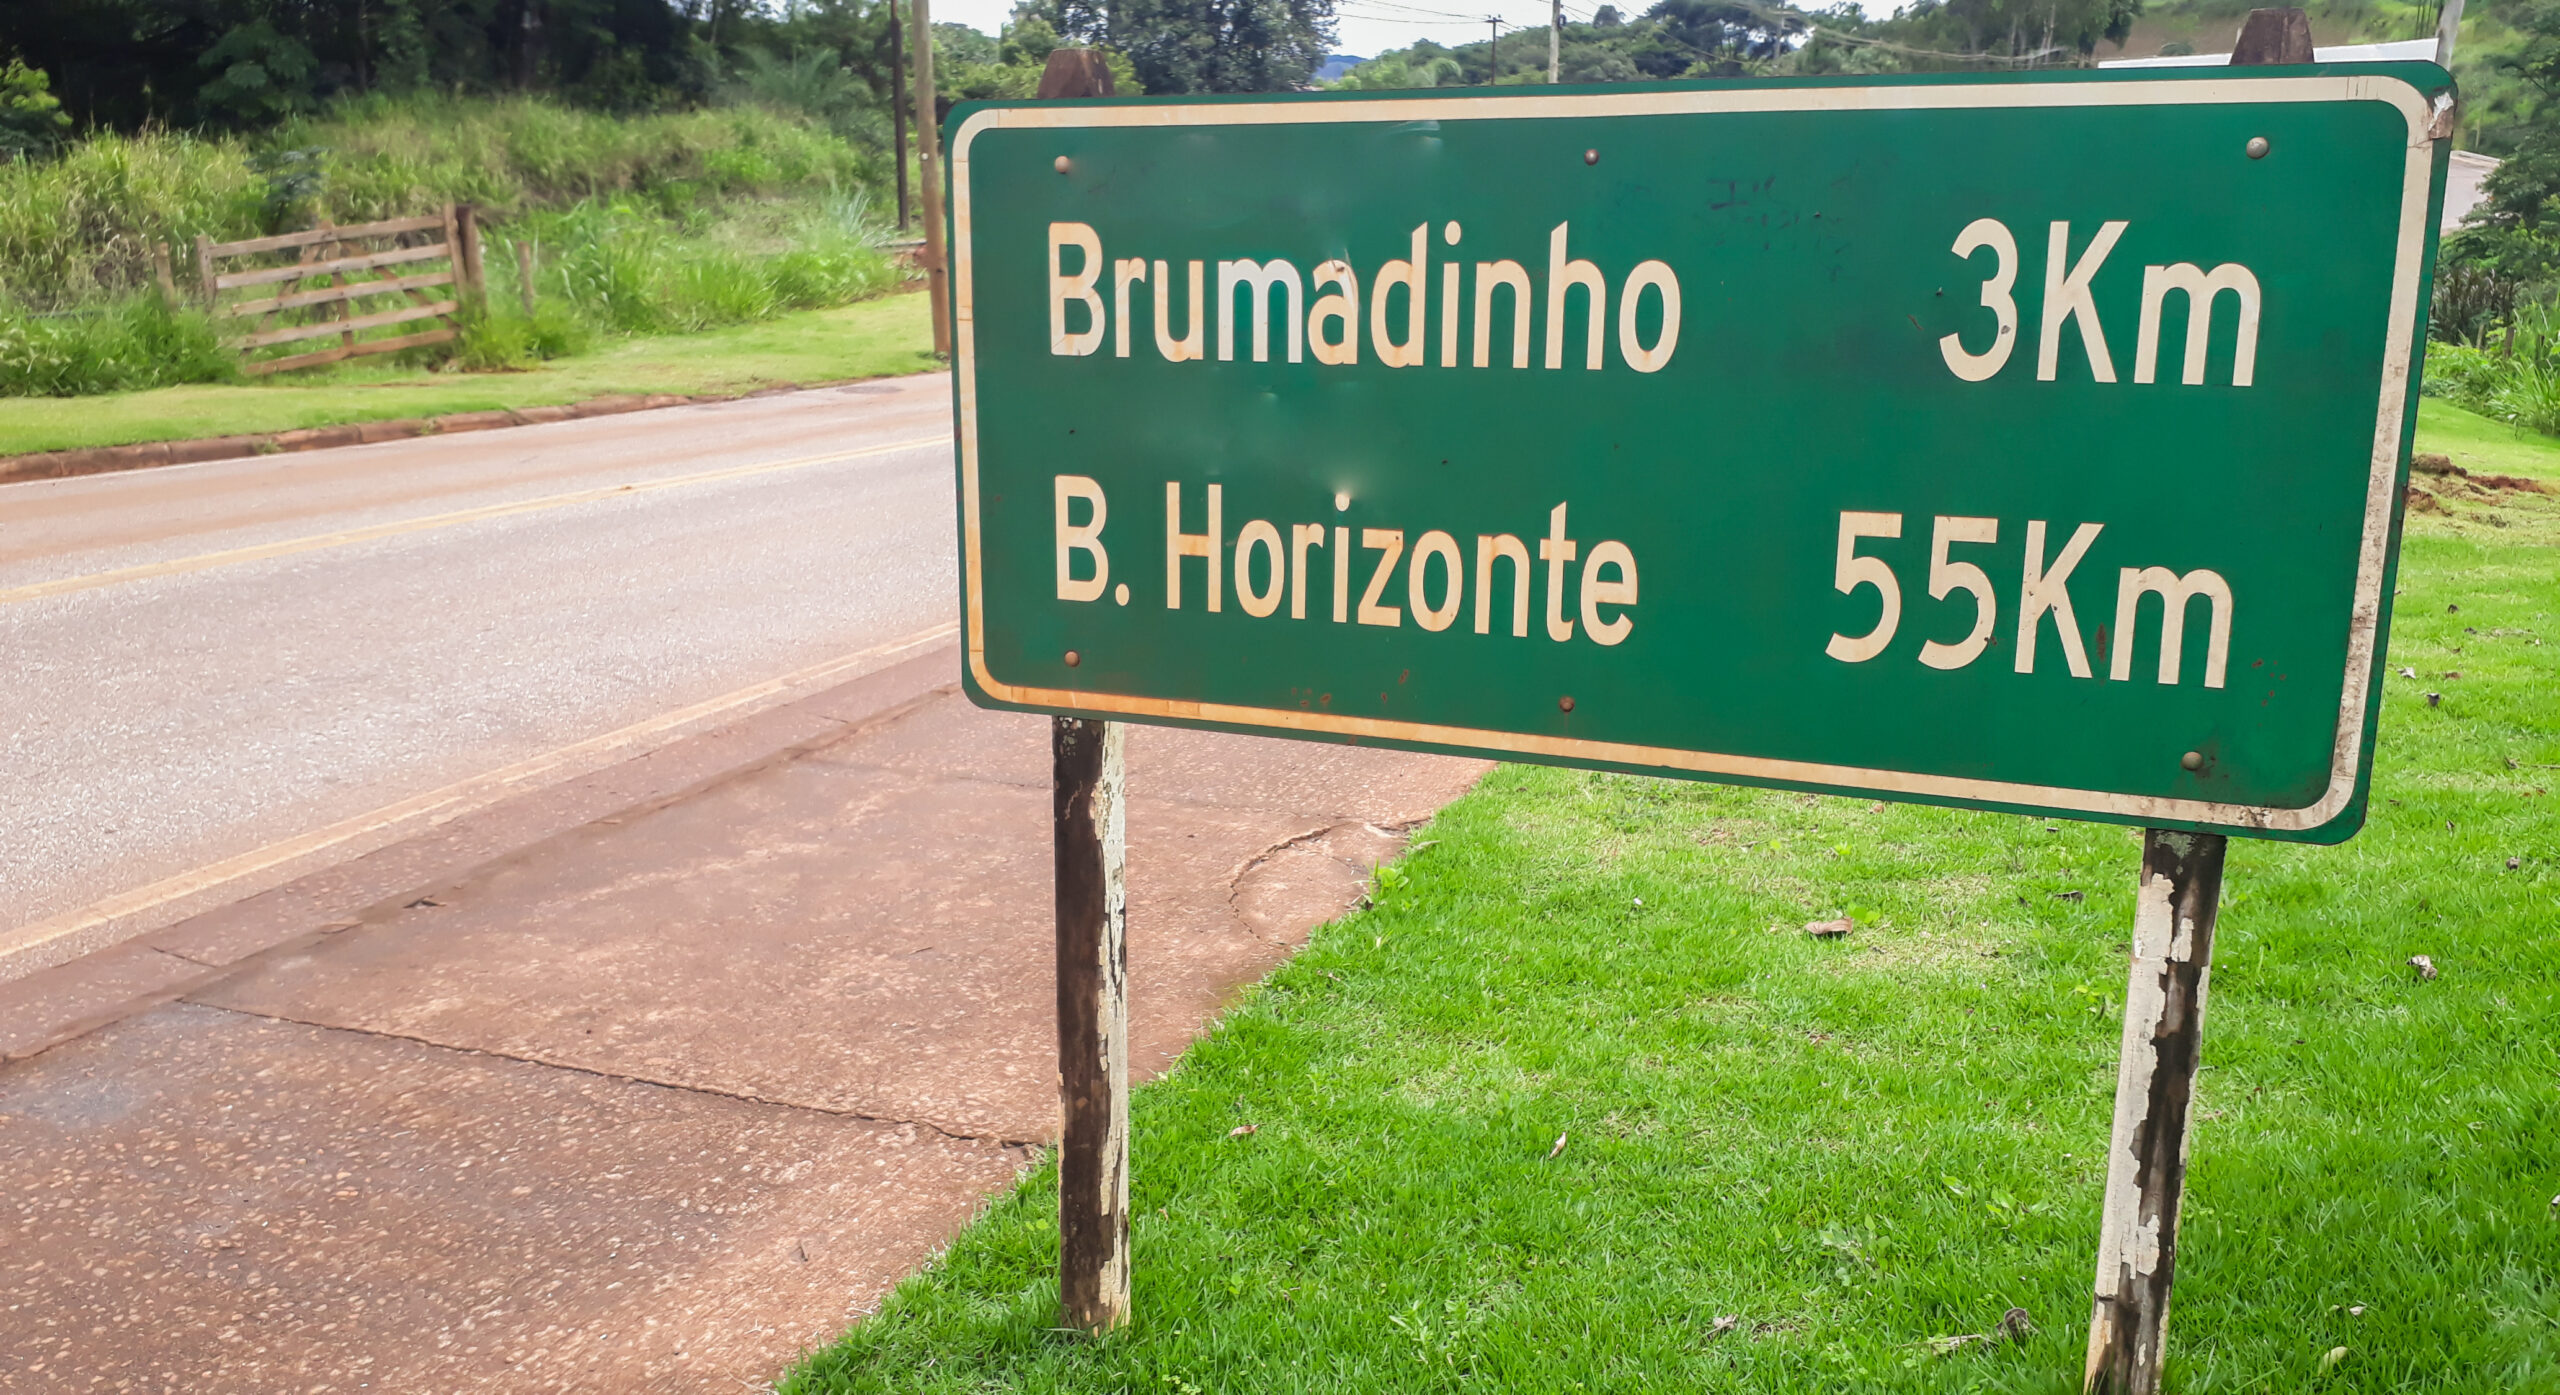 Brumadinho: 2019’s Tailings Tragedy